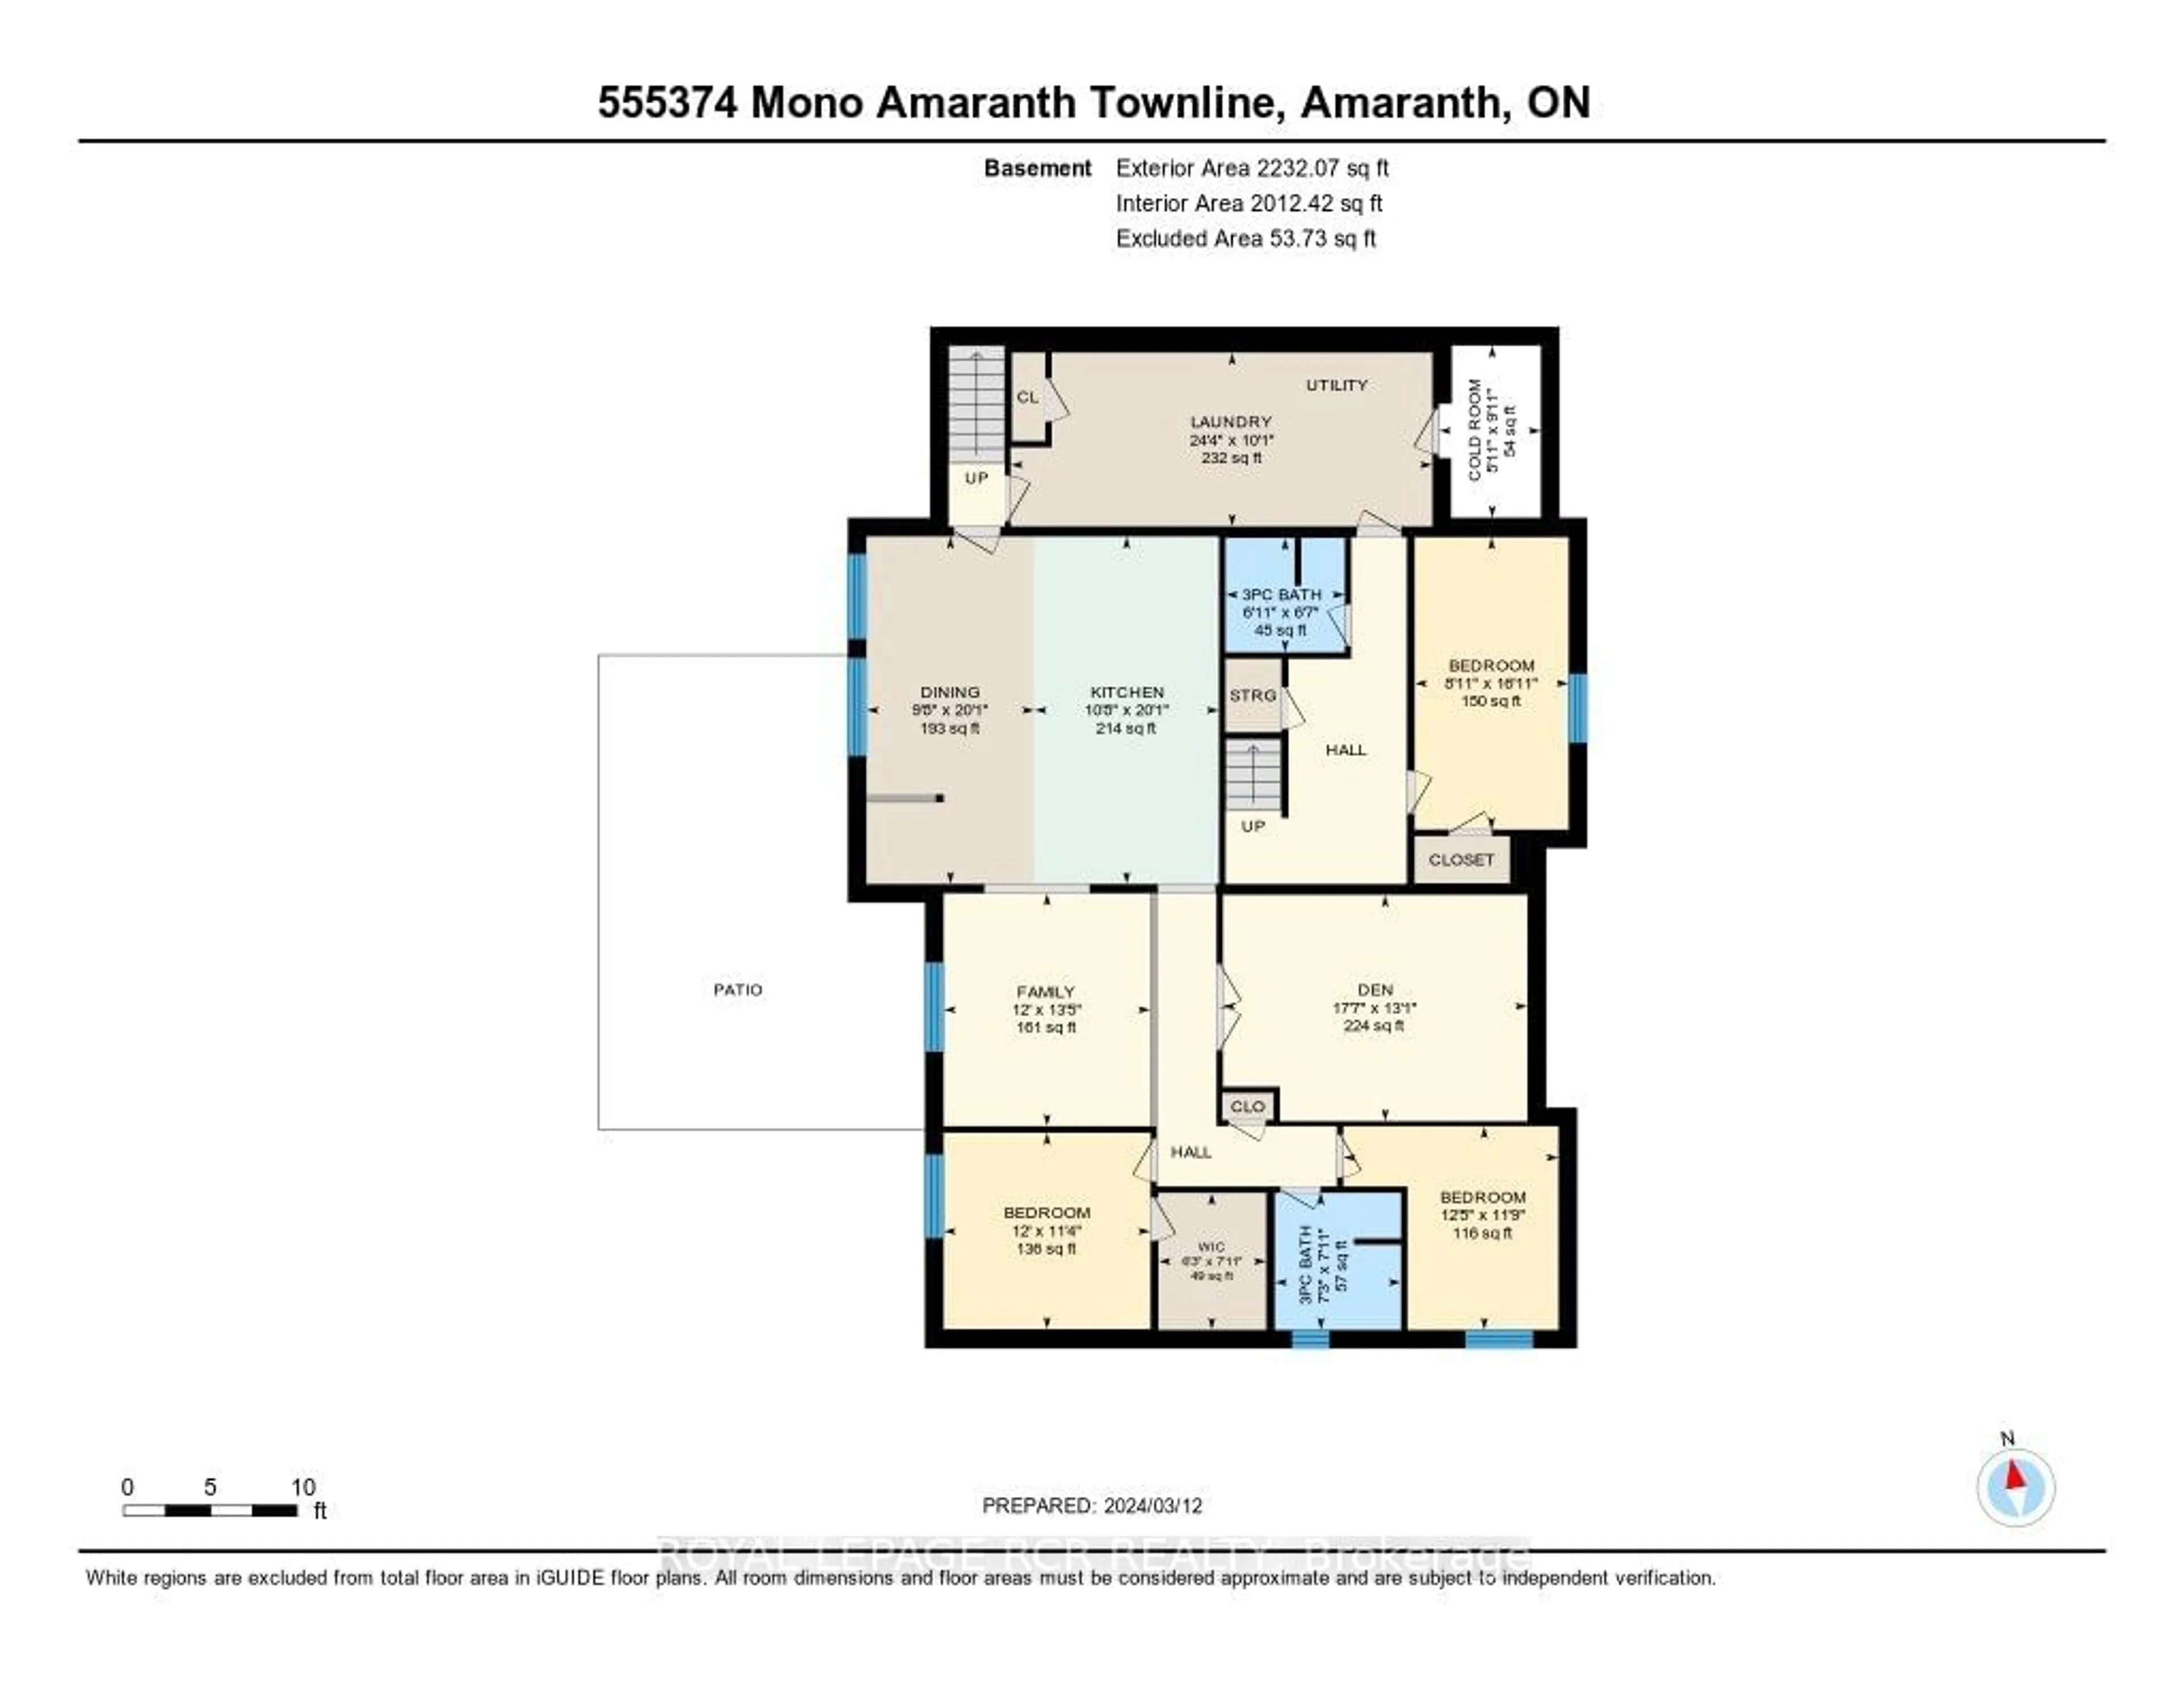 Floor plan for 555374 Mono Amaranth Line, Amaranth Ontario L9V 1L7